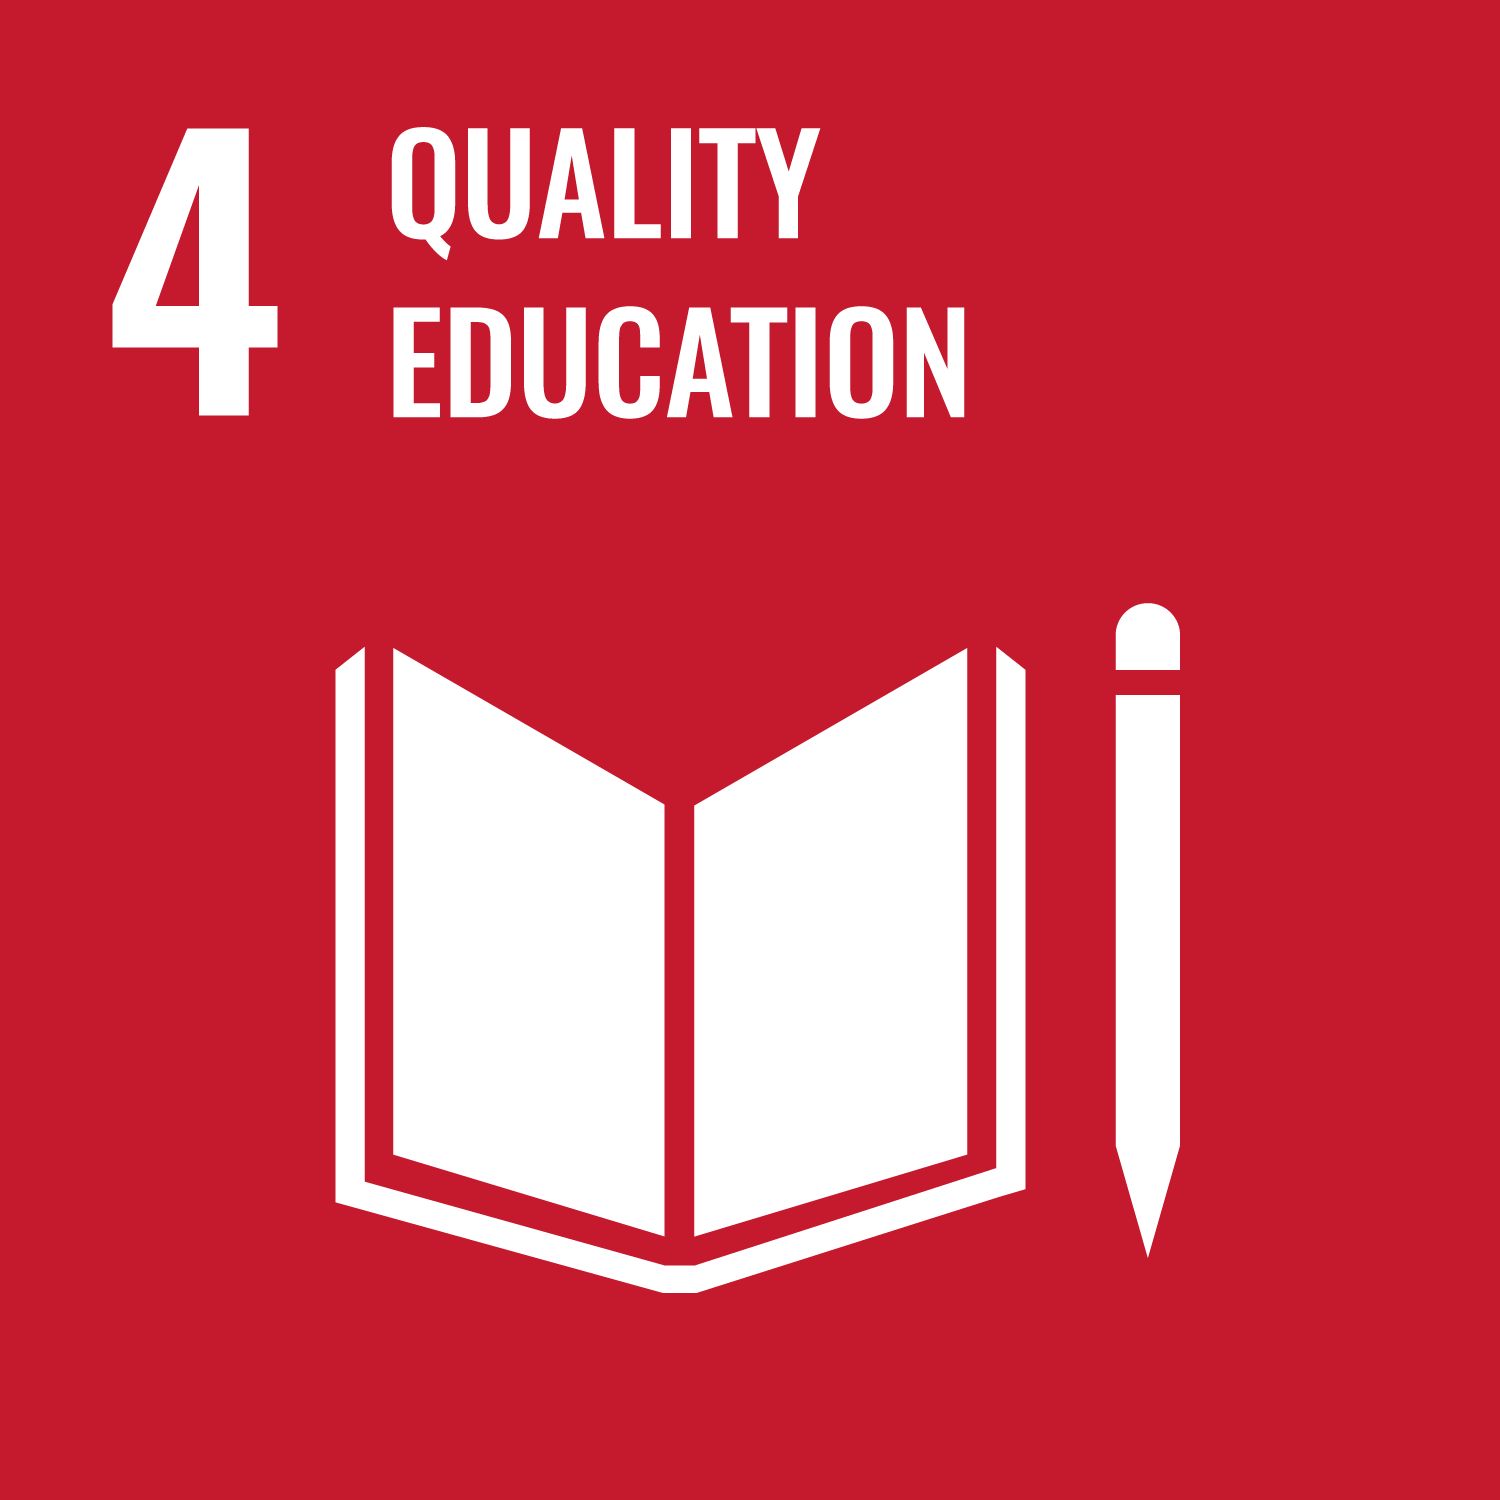 Sustainability Development Goal 4 (SDG 4) Quality Education